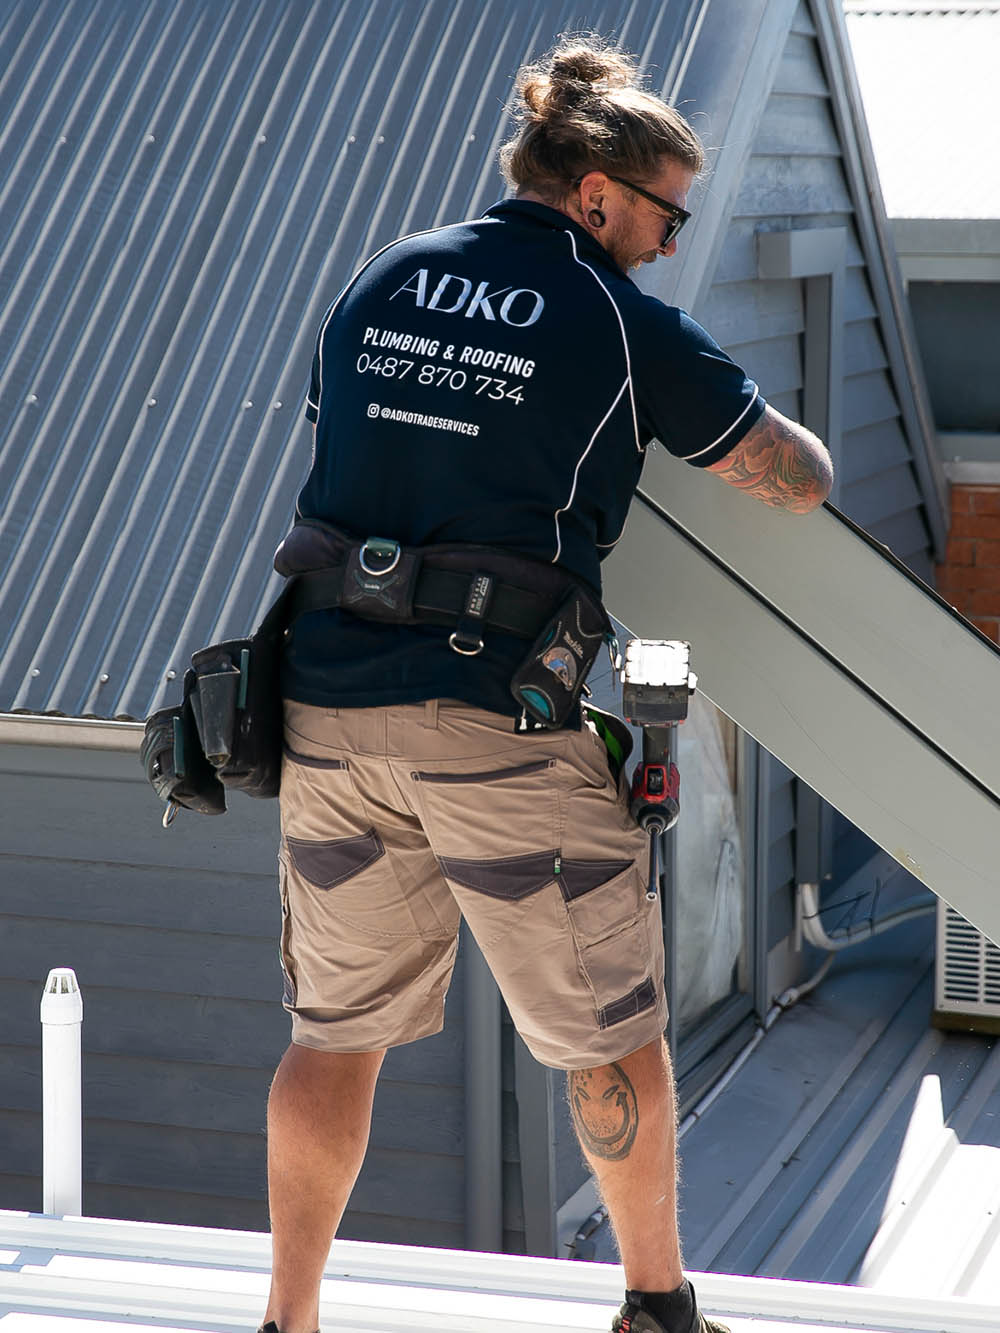 residential roof repairs